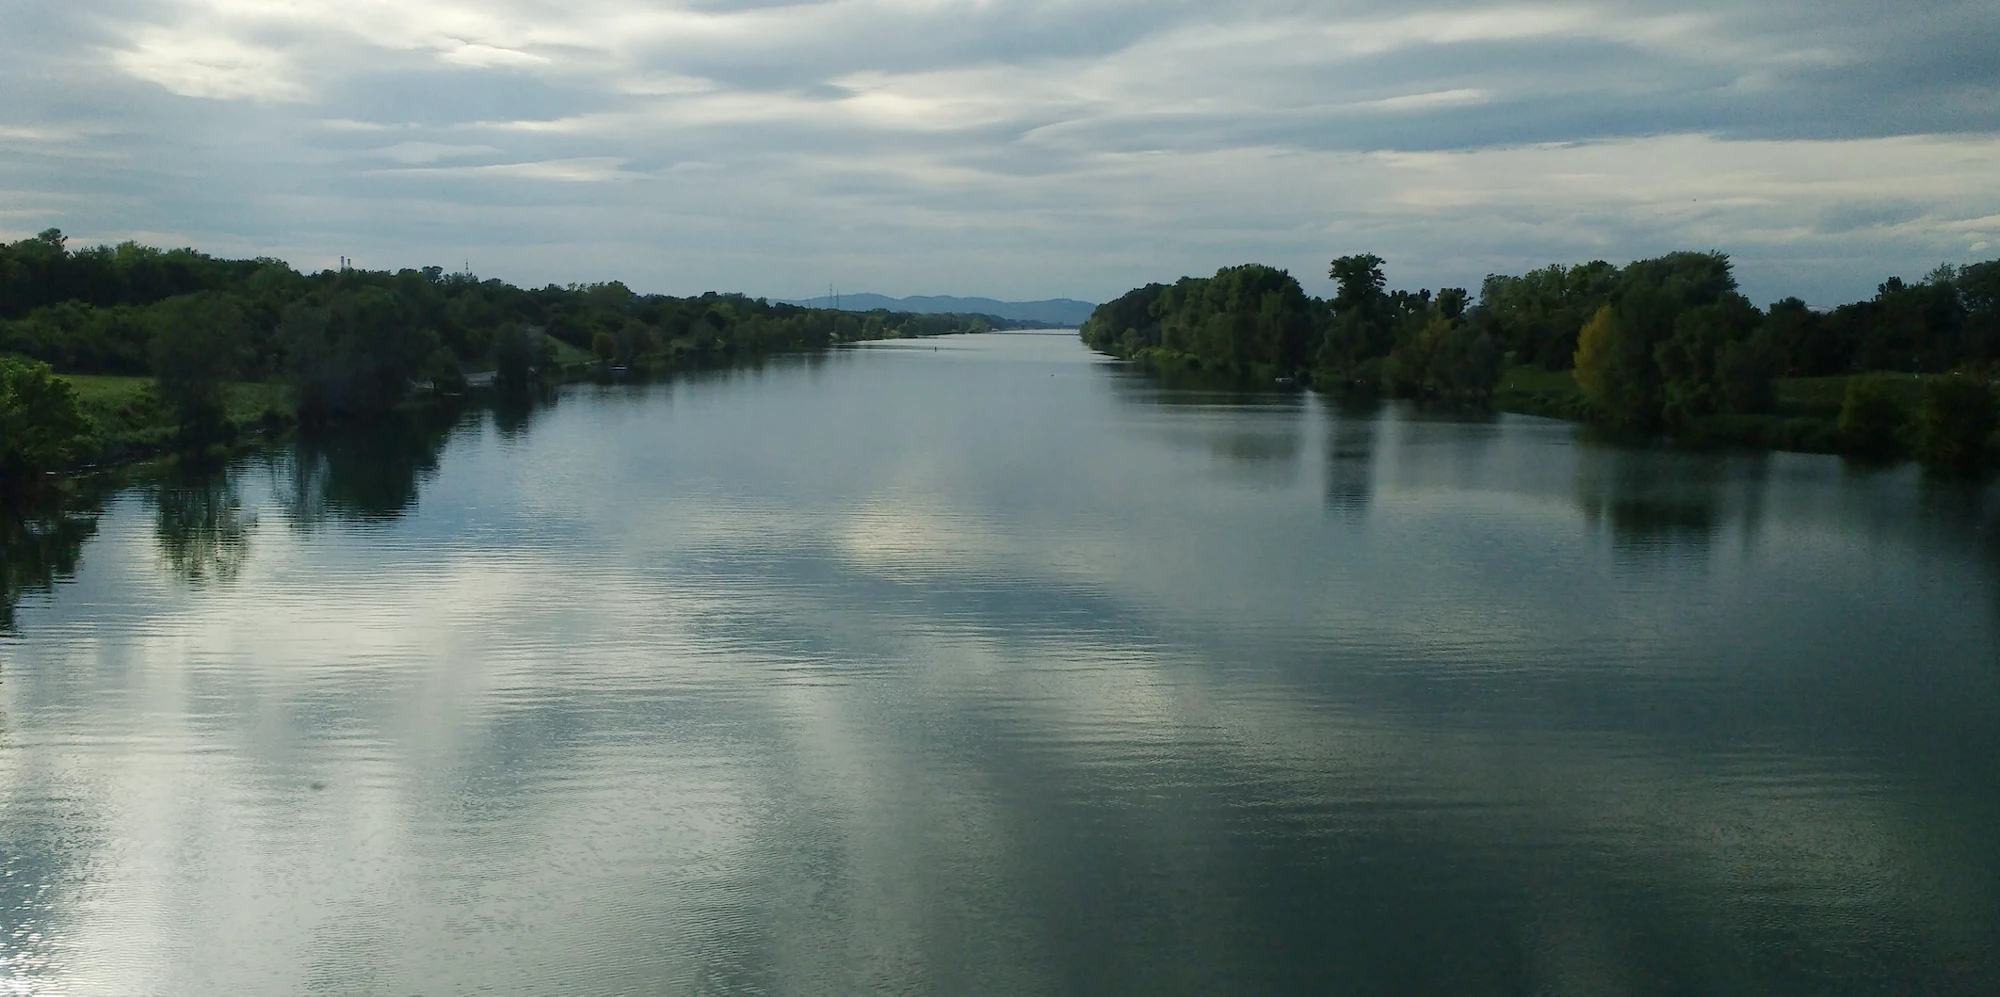 Danube River. Photo Credit: Markus Rauscher